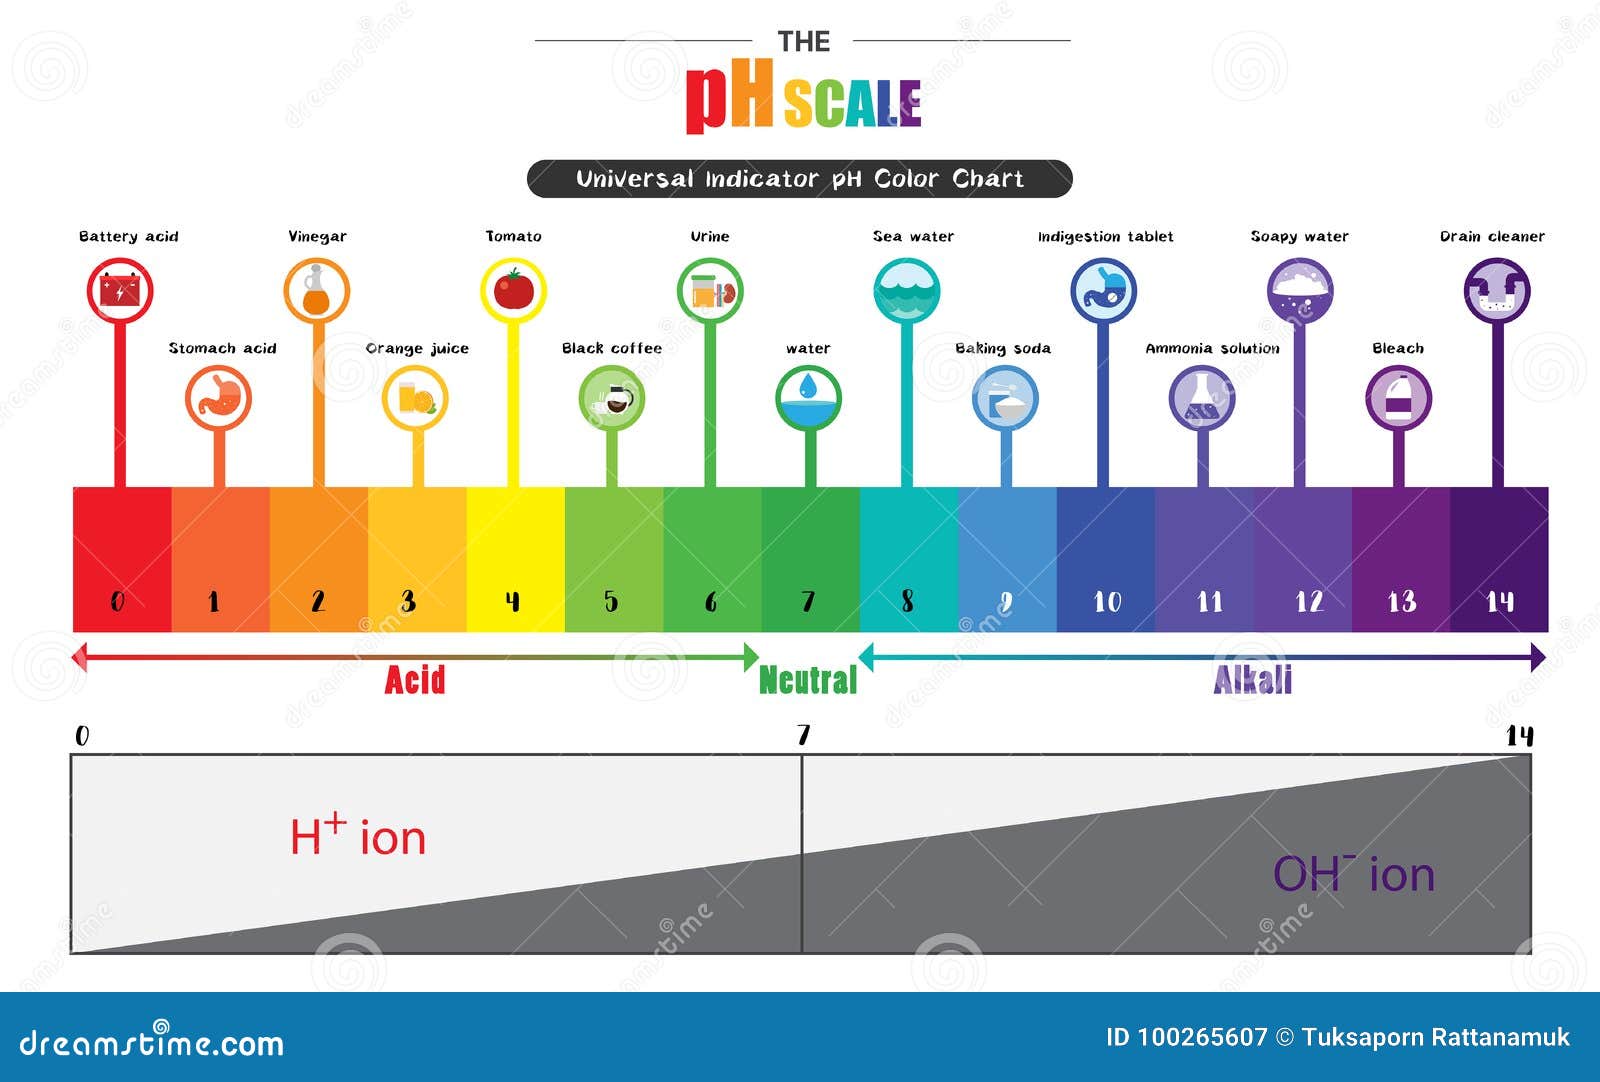 Acidic Vs Alkaline Ph Chart